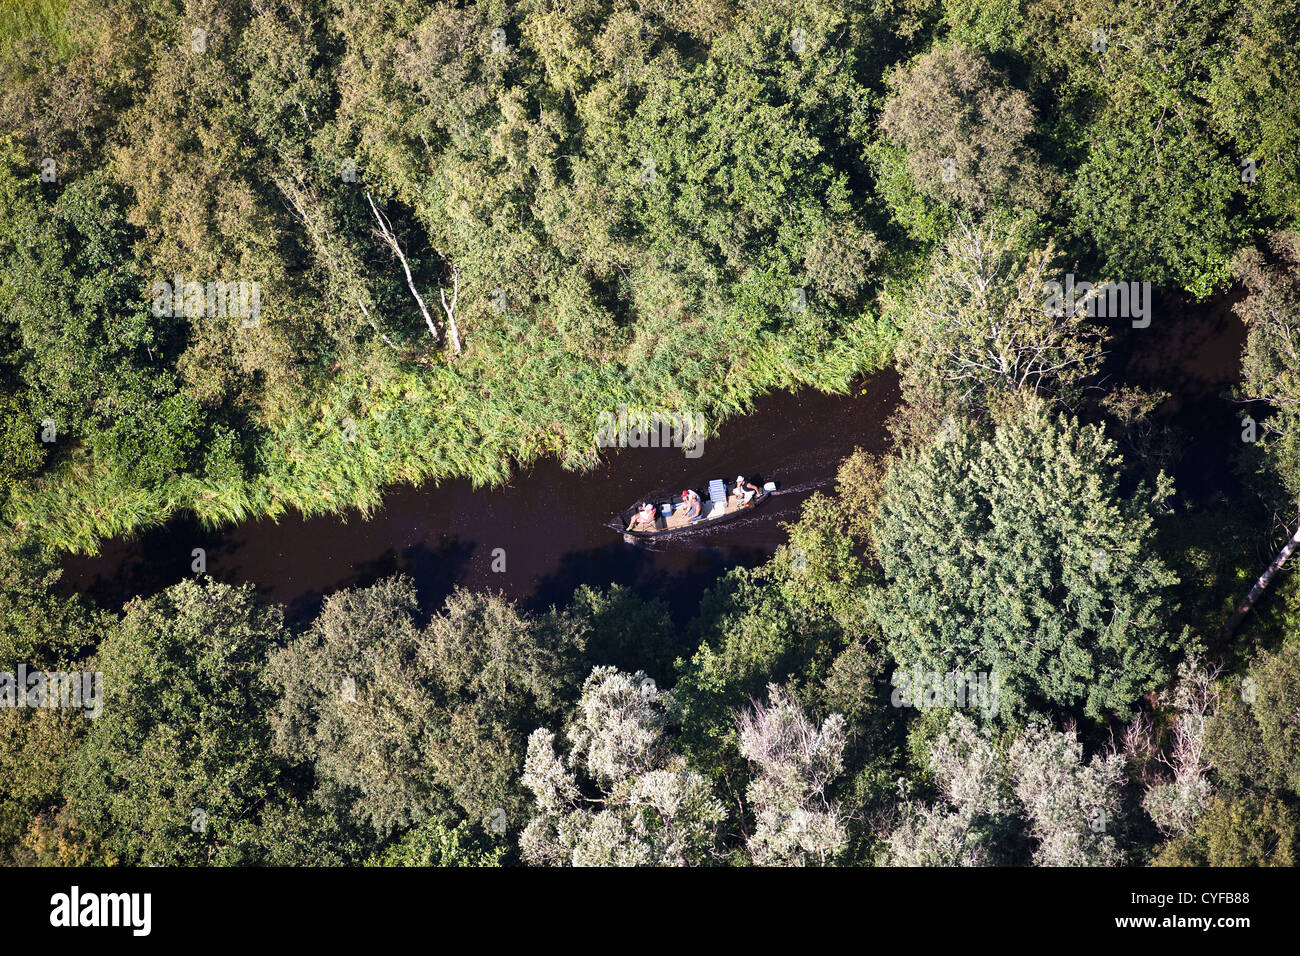 The Netherlands, Kalenberg, Weerribben-Wieden National Park. People in small motorboat. Aerial. Stock Photo